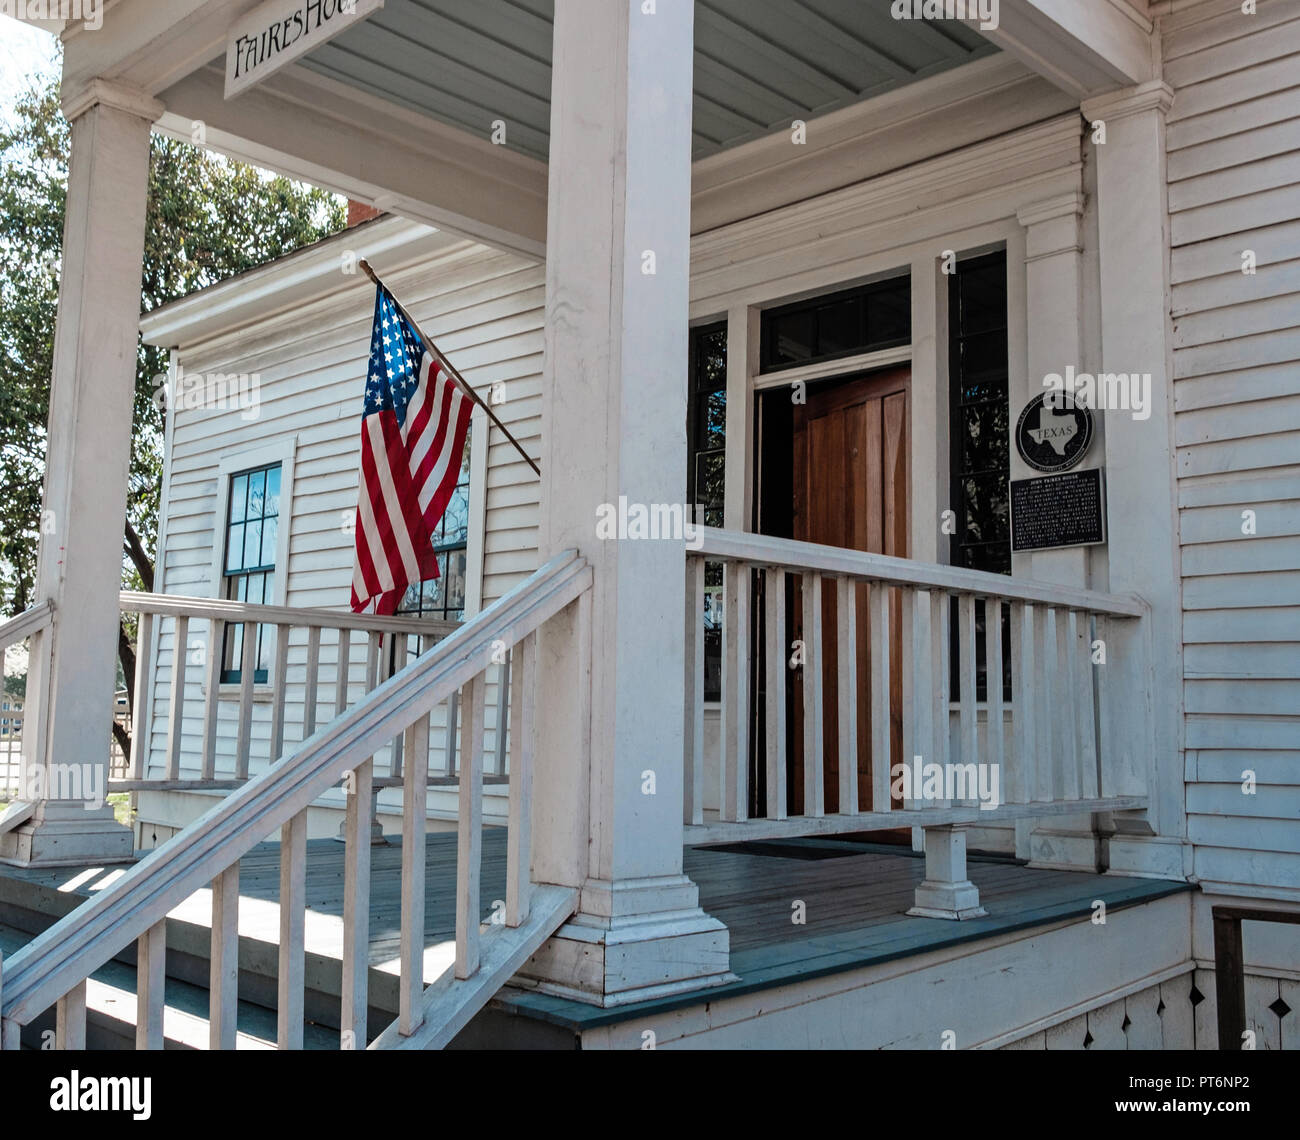 Entrada frontal de blanco shingled casa con pasos. Casa más antigua en pie en Mckinney, Texas, plaza de castaños. Build 1854. Bandera Americana en polo extendido Foto de stock